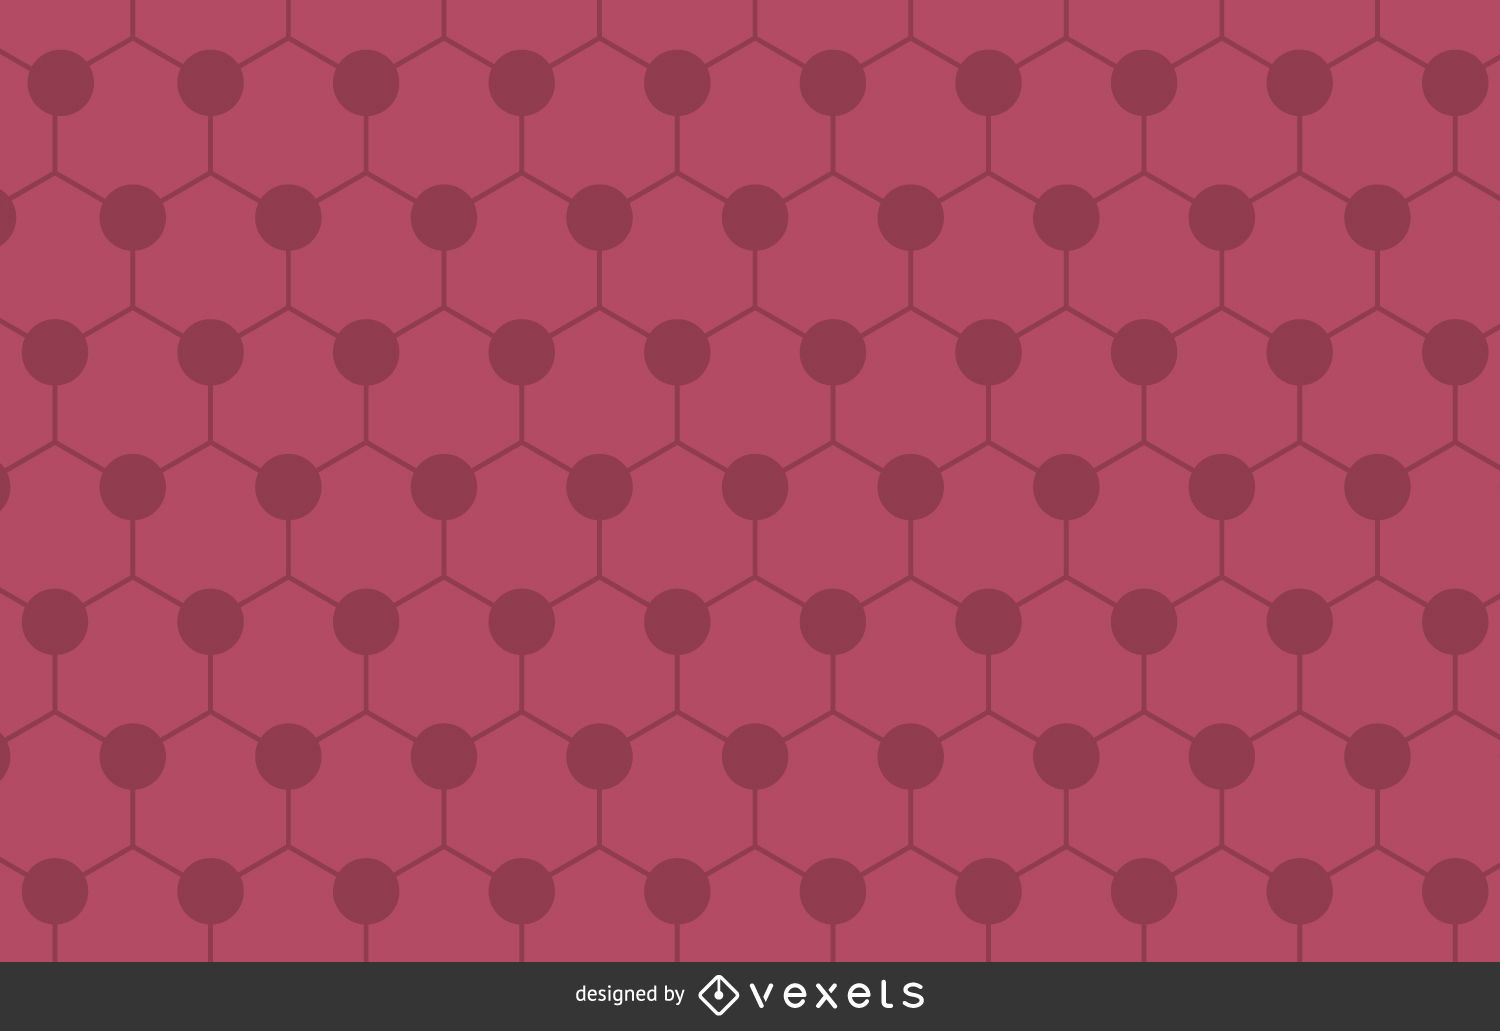 Fondo poligonal hexagonal rosa